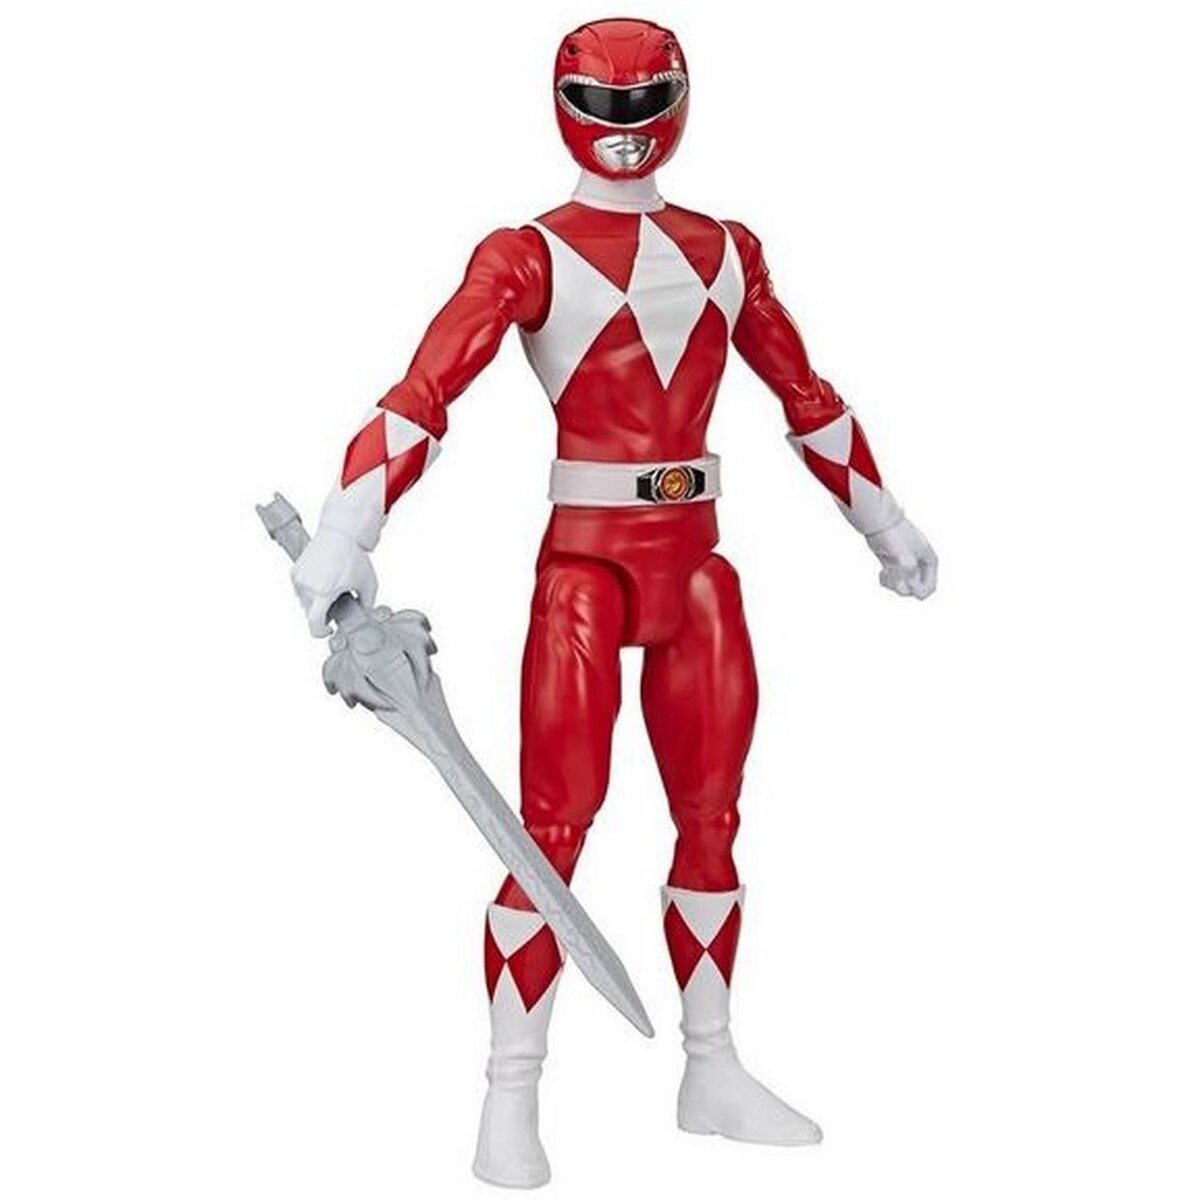 HASBRO Figurine Mighty Morphin Power Rangers Red Ranger